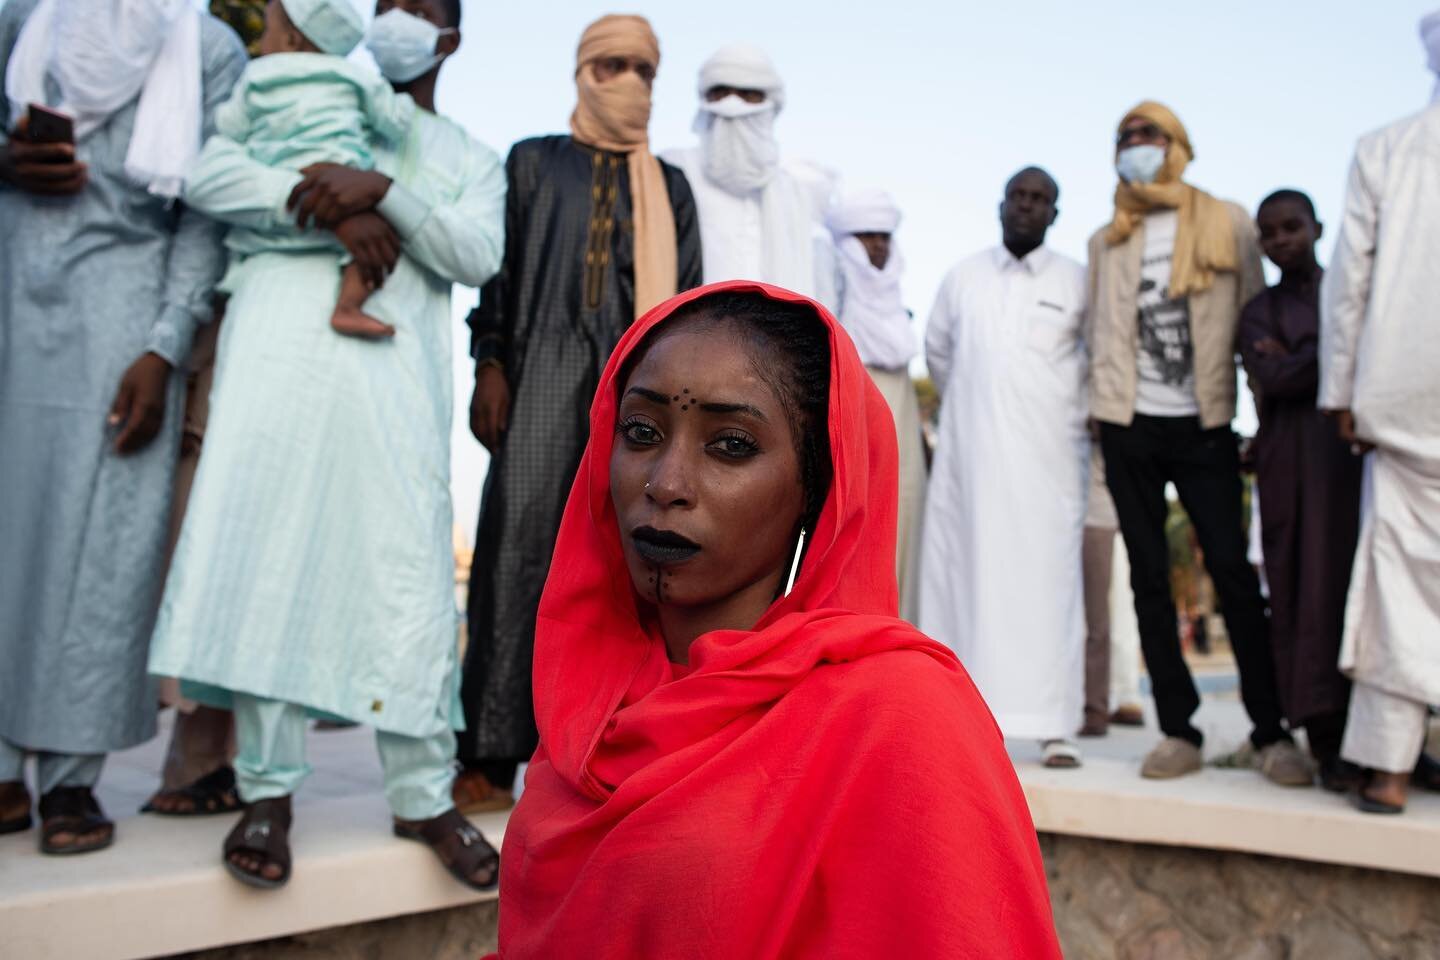 A Libyan Tebu woman at the Libyan Tebu Cultural Festival in Tripoli, Libya, on Sept. 17, 2020 
Photo by @nada_harib 

The sub-Saharan African Tebu tribe is part of the Libyan social fabric, along with Arabs, Amazigh and Tuareg. They inhabit a wide ar